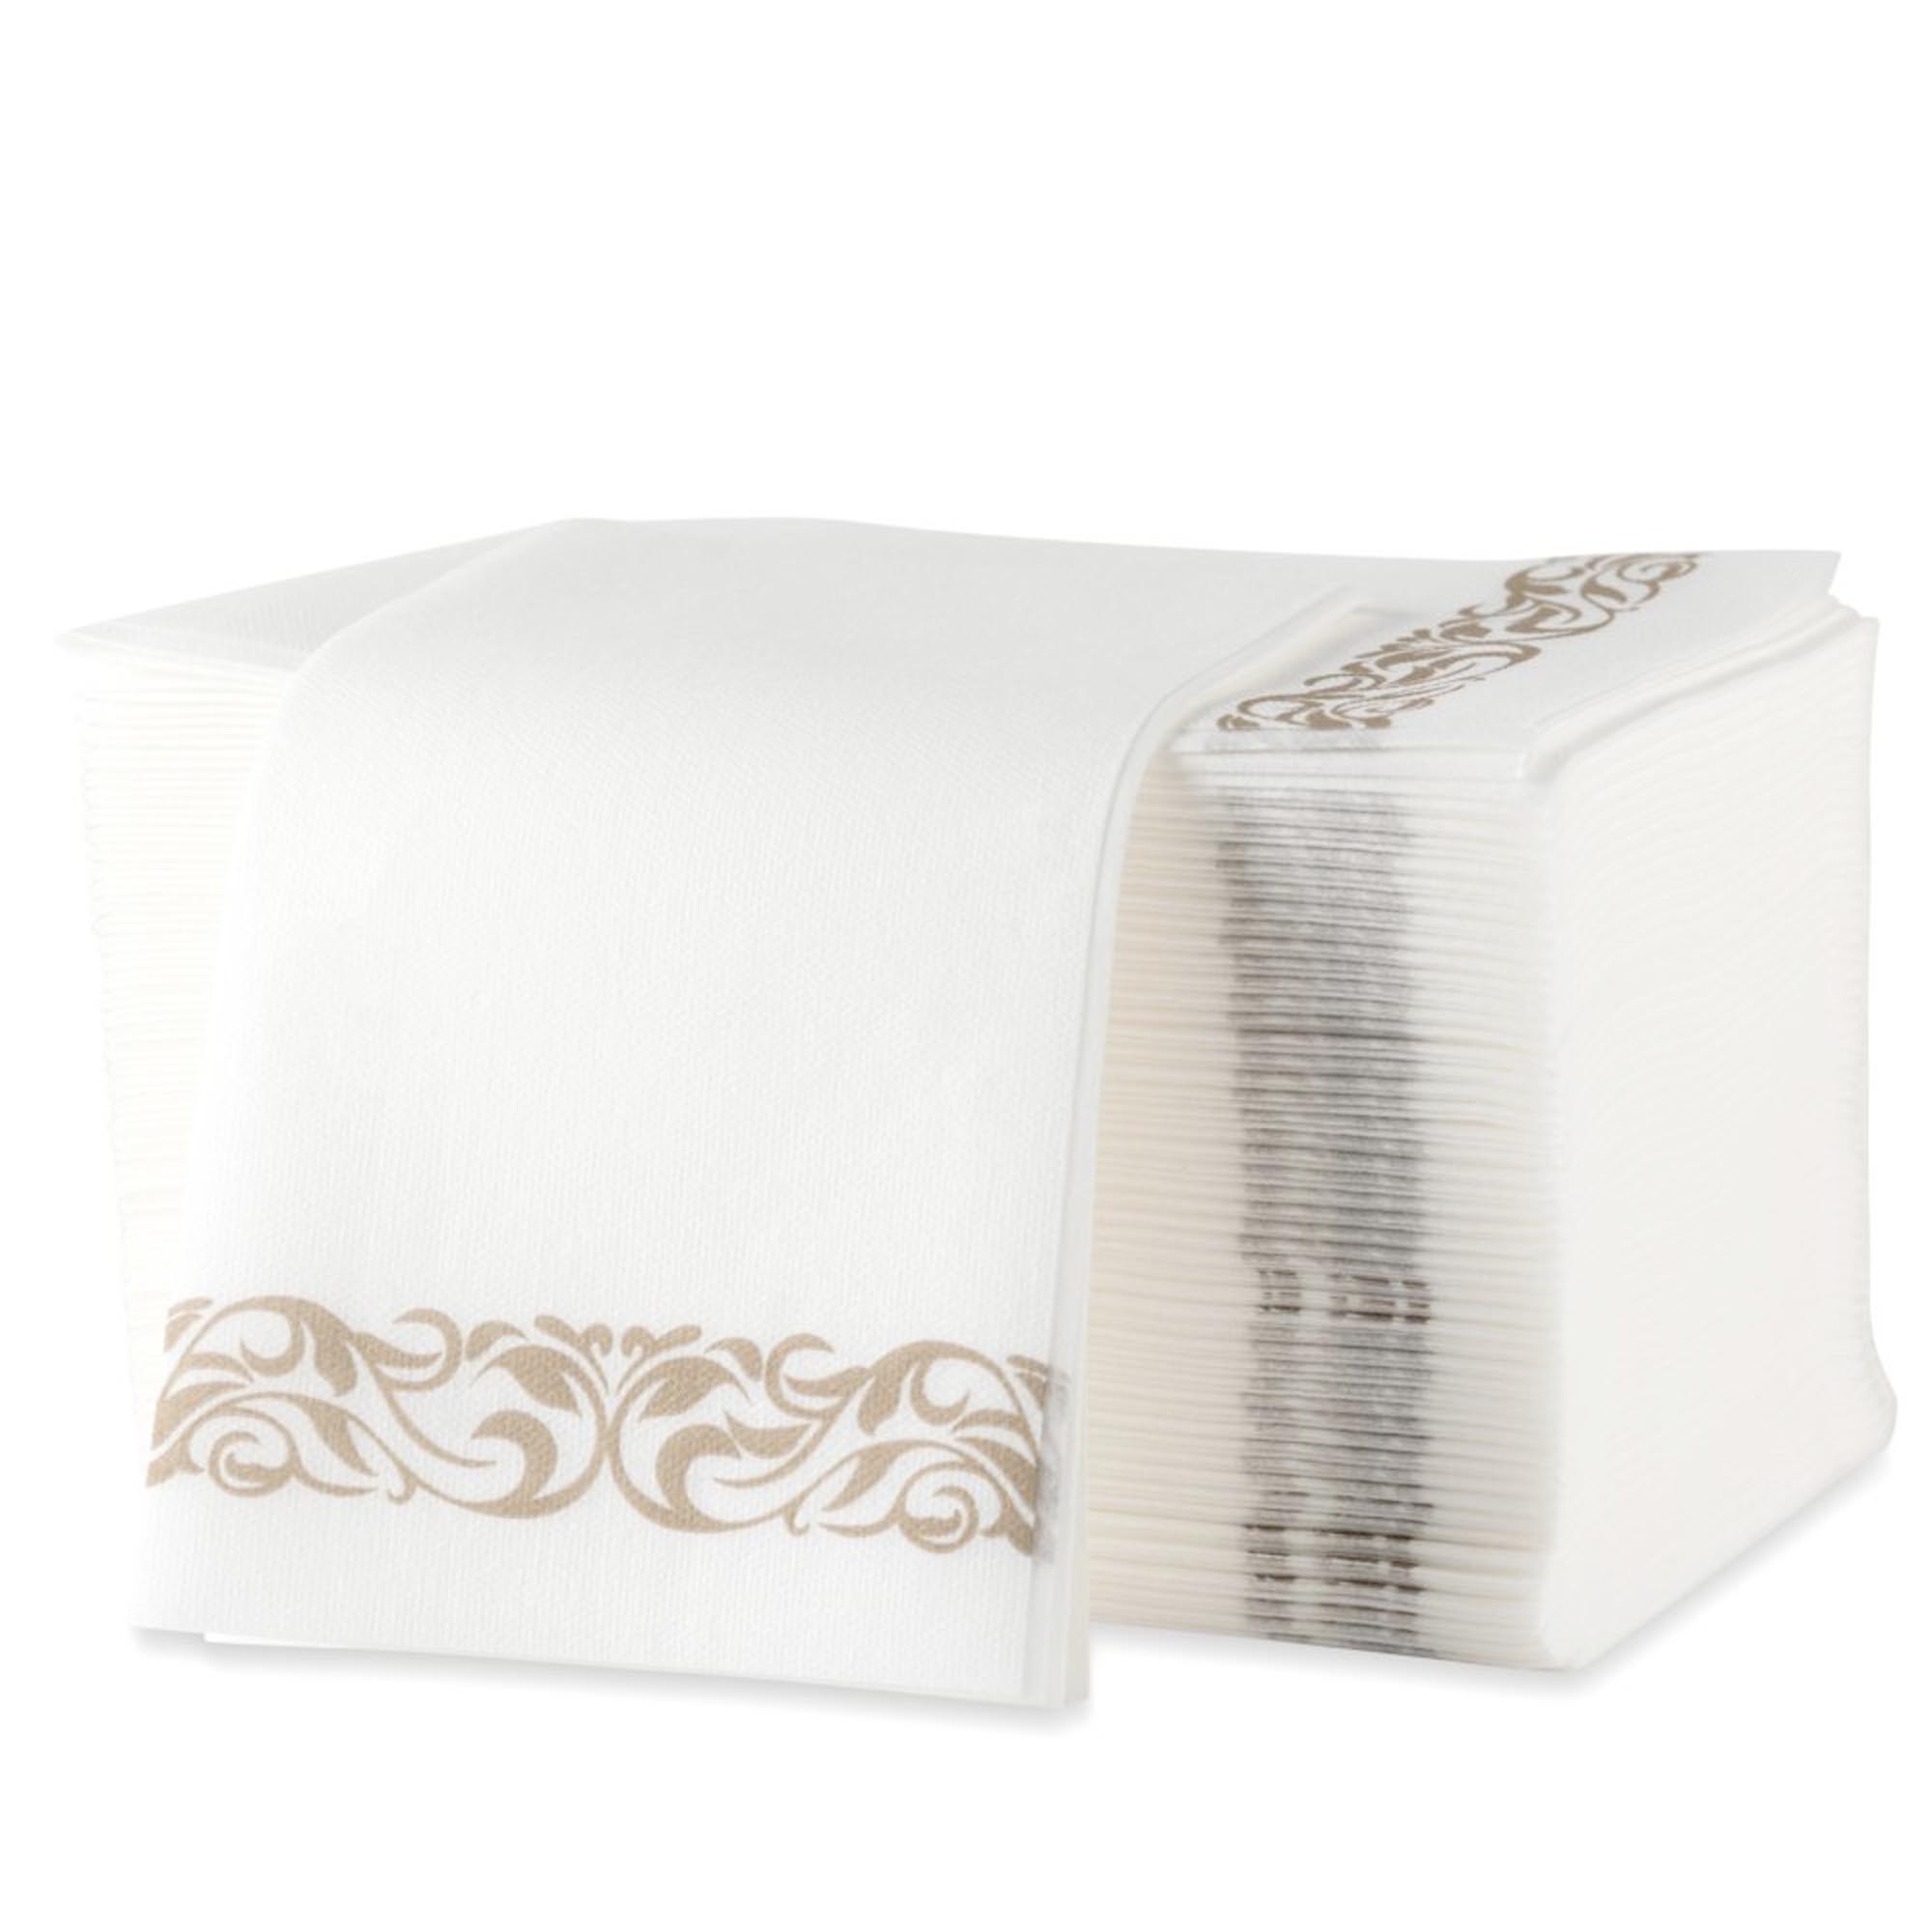 Guest Hand Towels Linen-Like Paper Soft and Absorbent Design Border Napkins